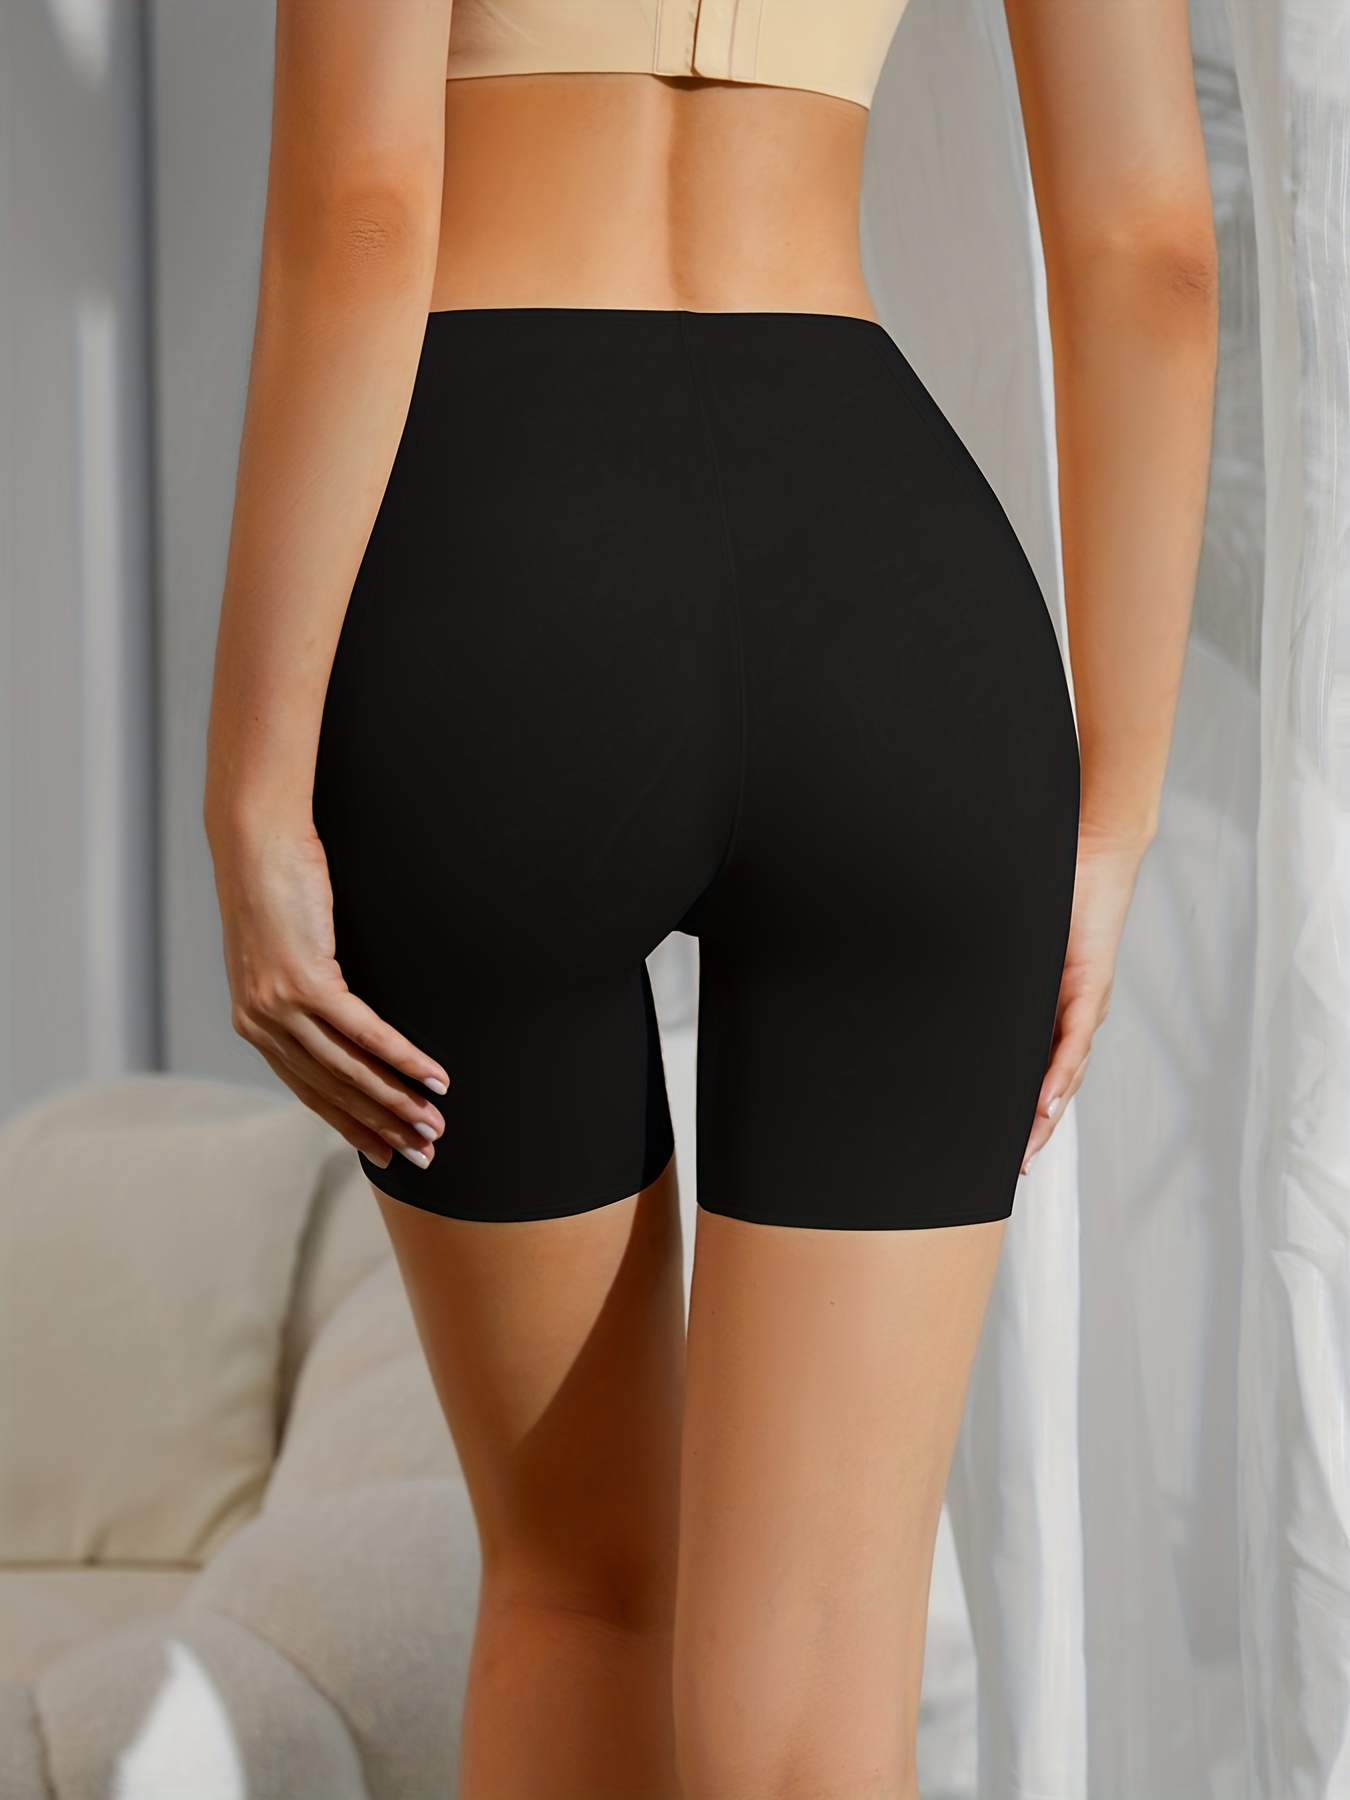 Seamless highwaist boyleg shorts with light support, black. Colour